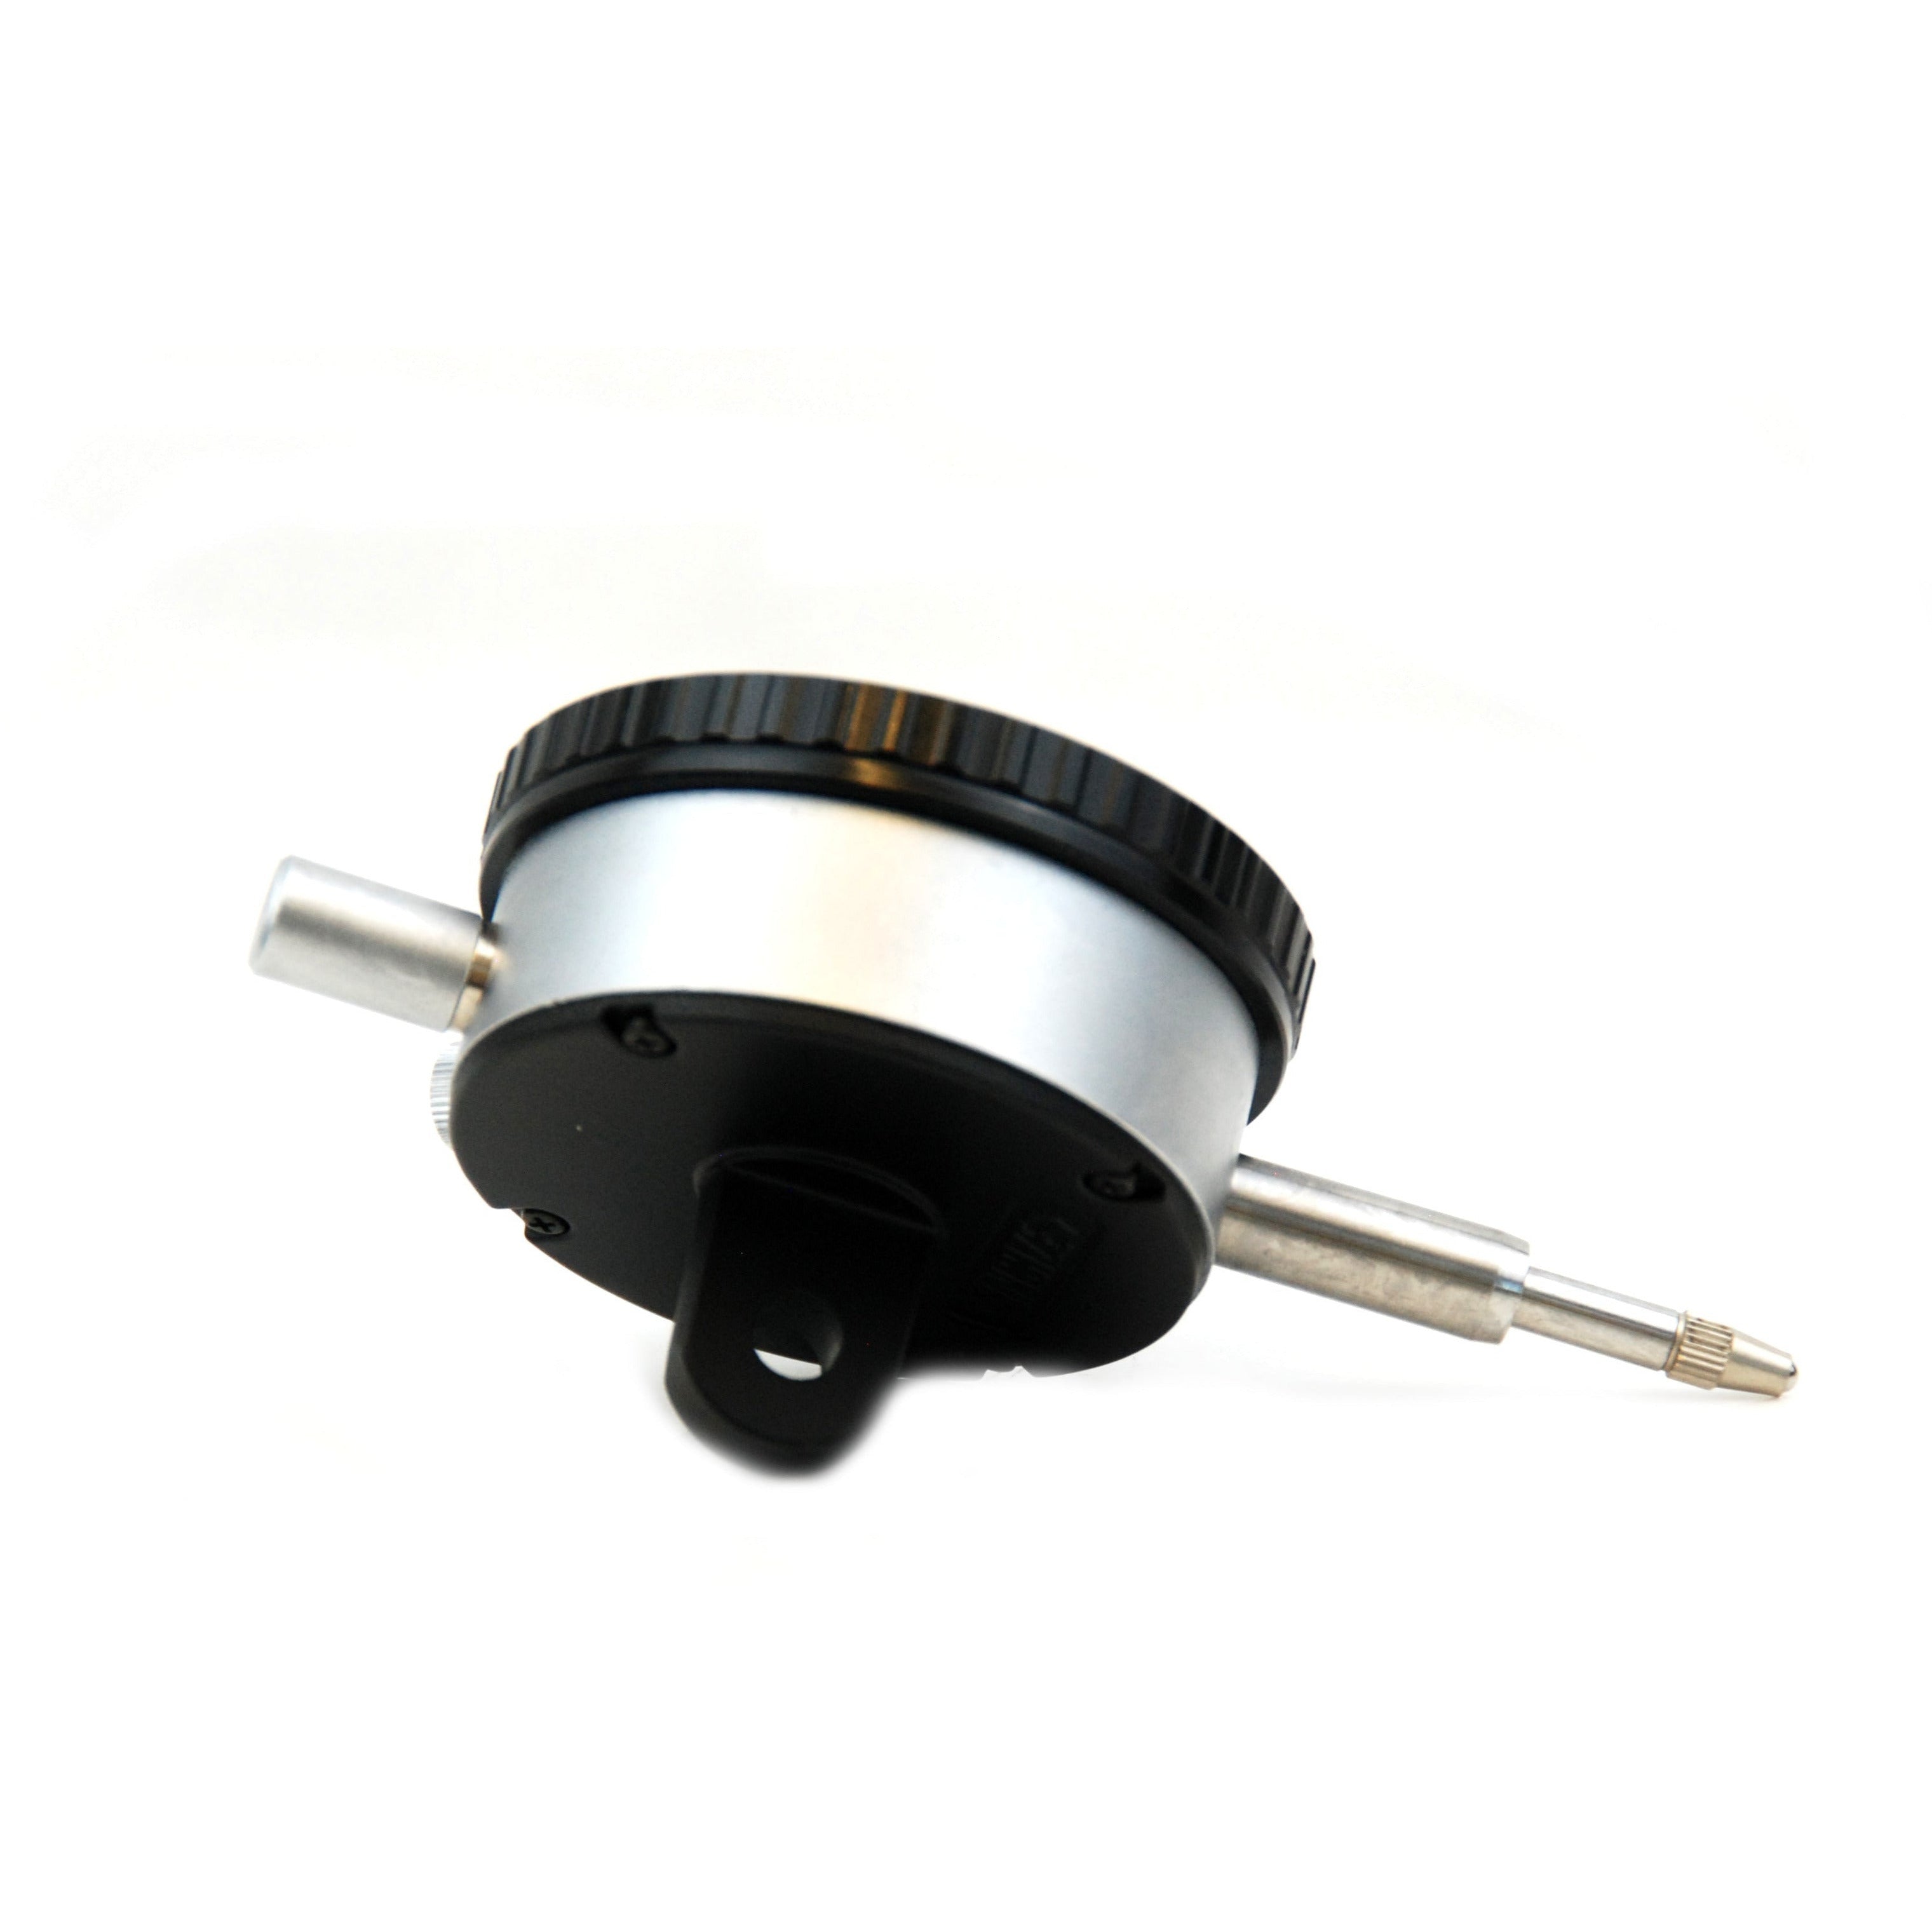 Insize Metric Lug Back Dial Indicator 10mm Range Series 2308-10A